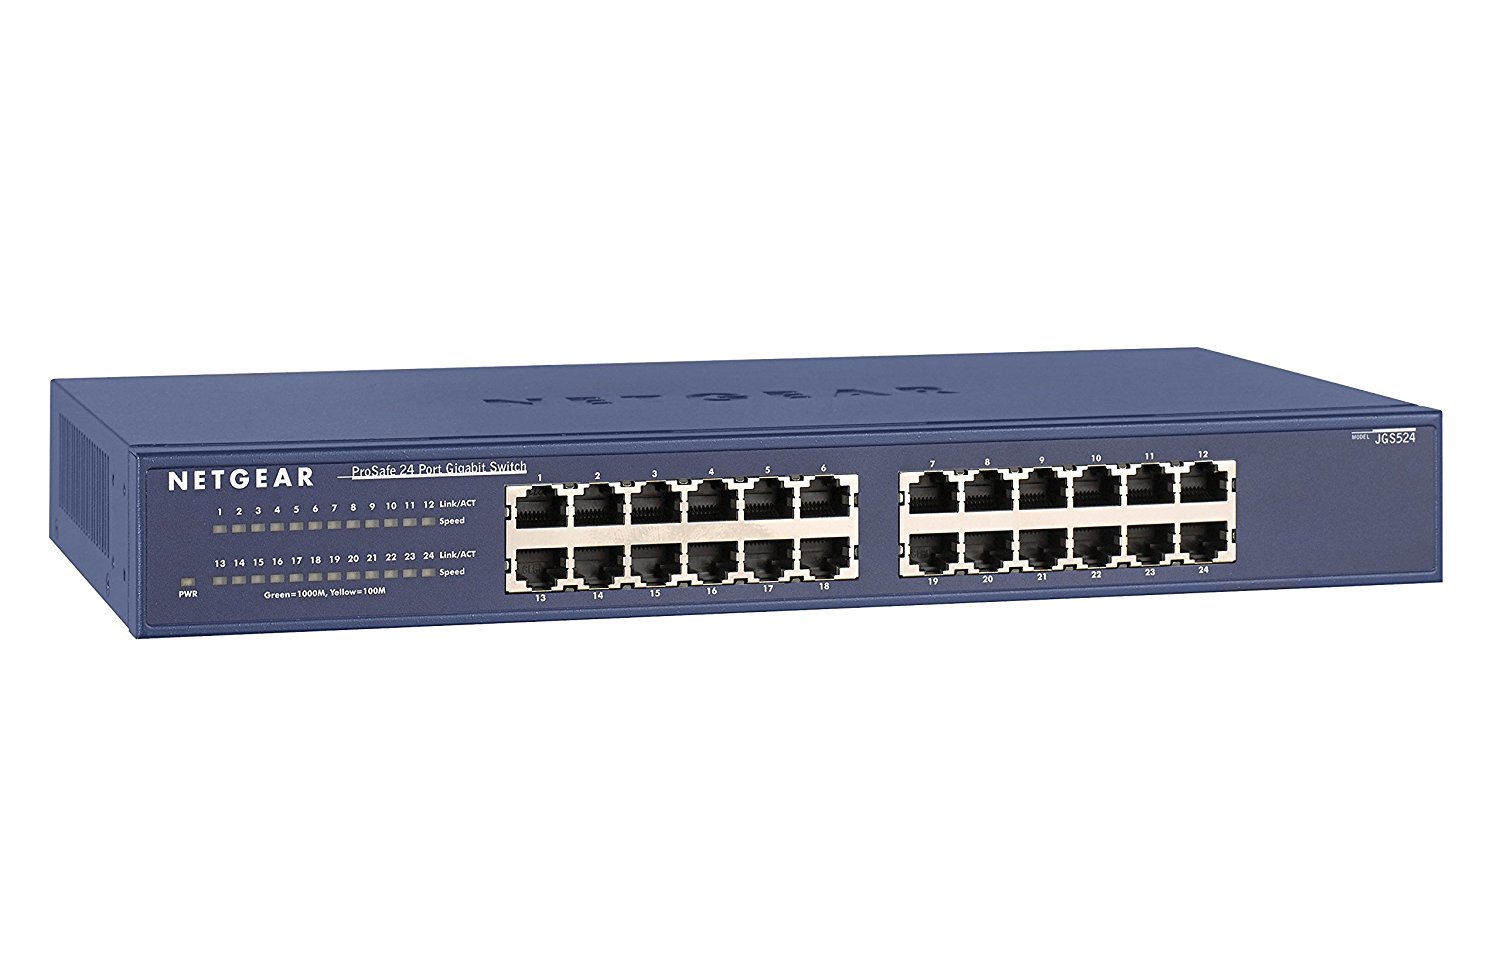 NETGEAR 24-port 10/ 100/ 1000Mbps Gigibit Ethernet, Unmanaged, JGS524 